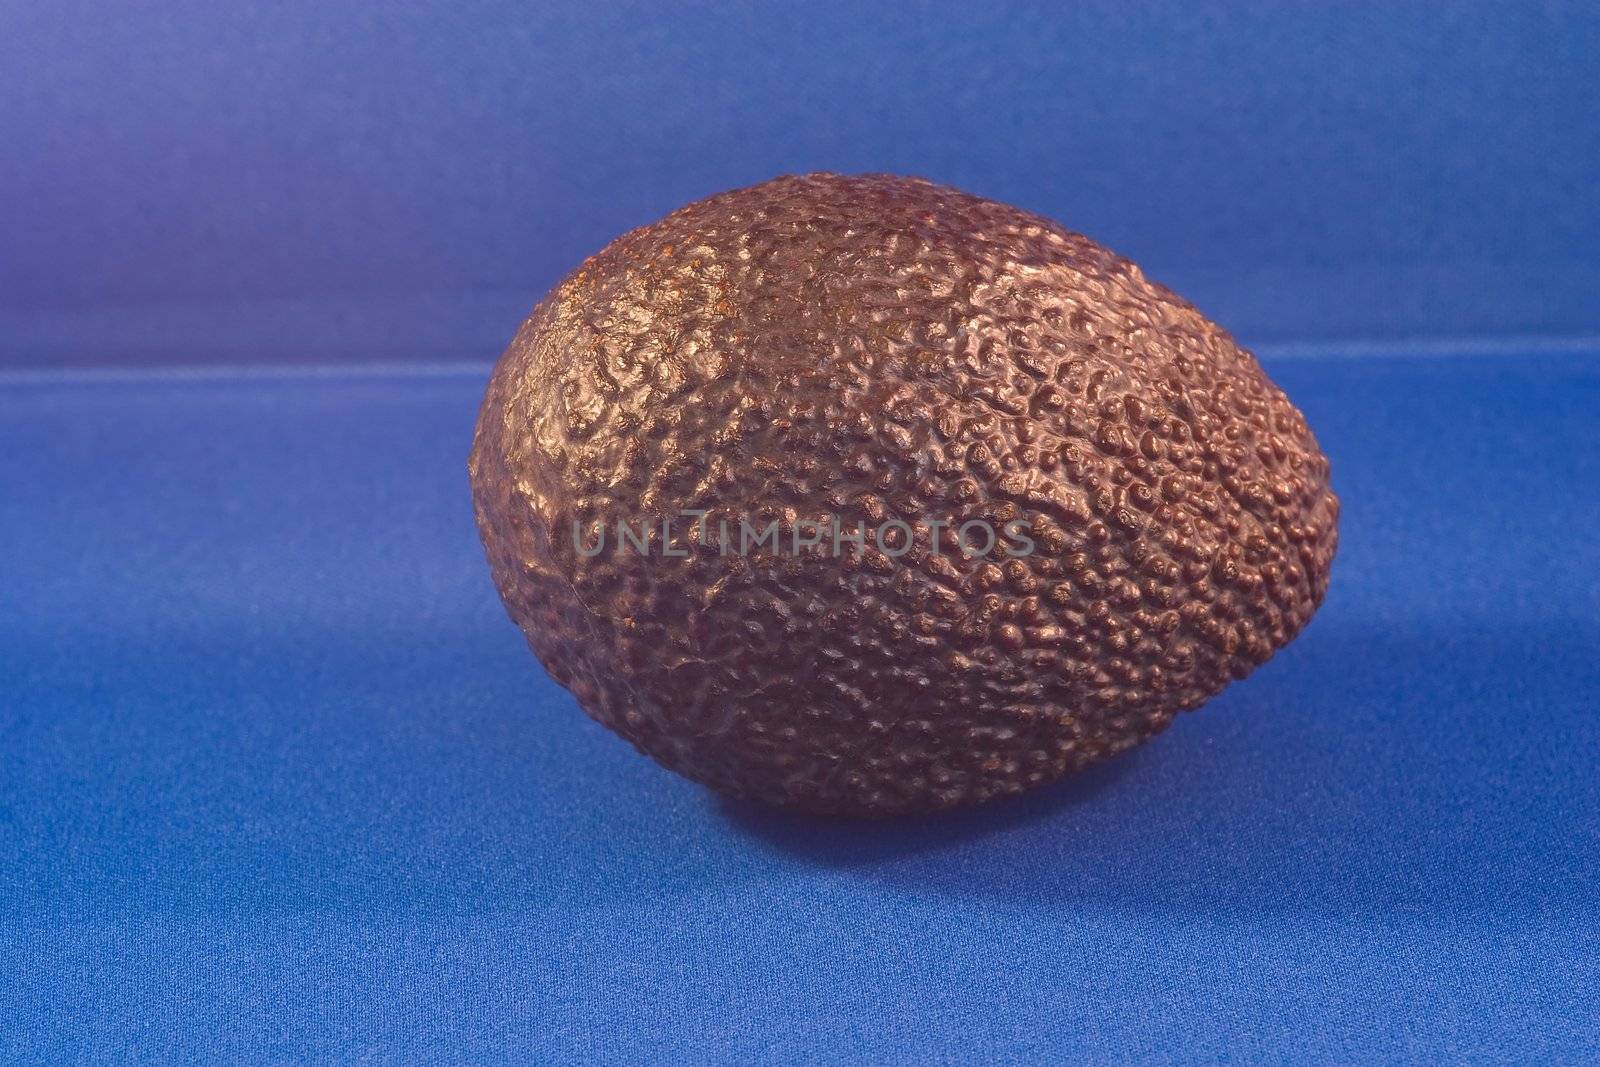 Avocado by melastmohican